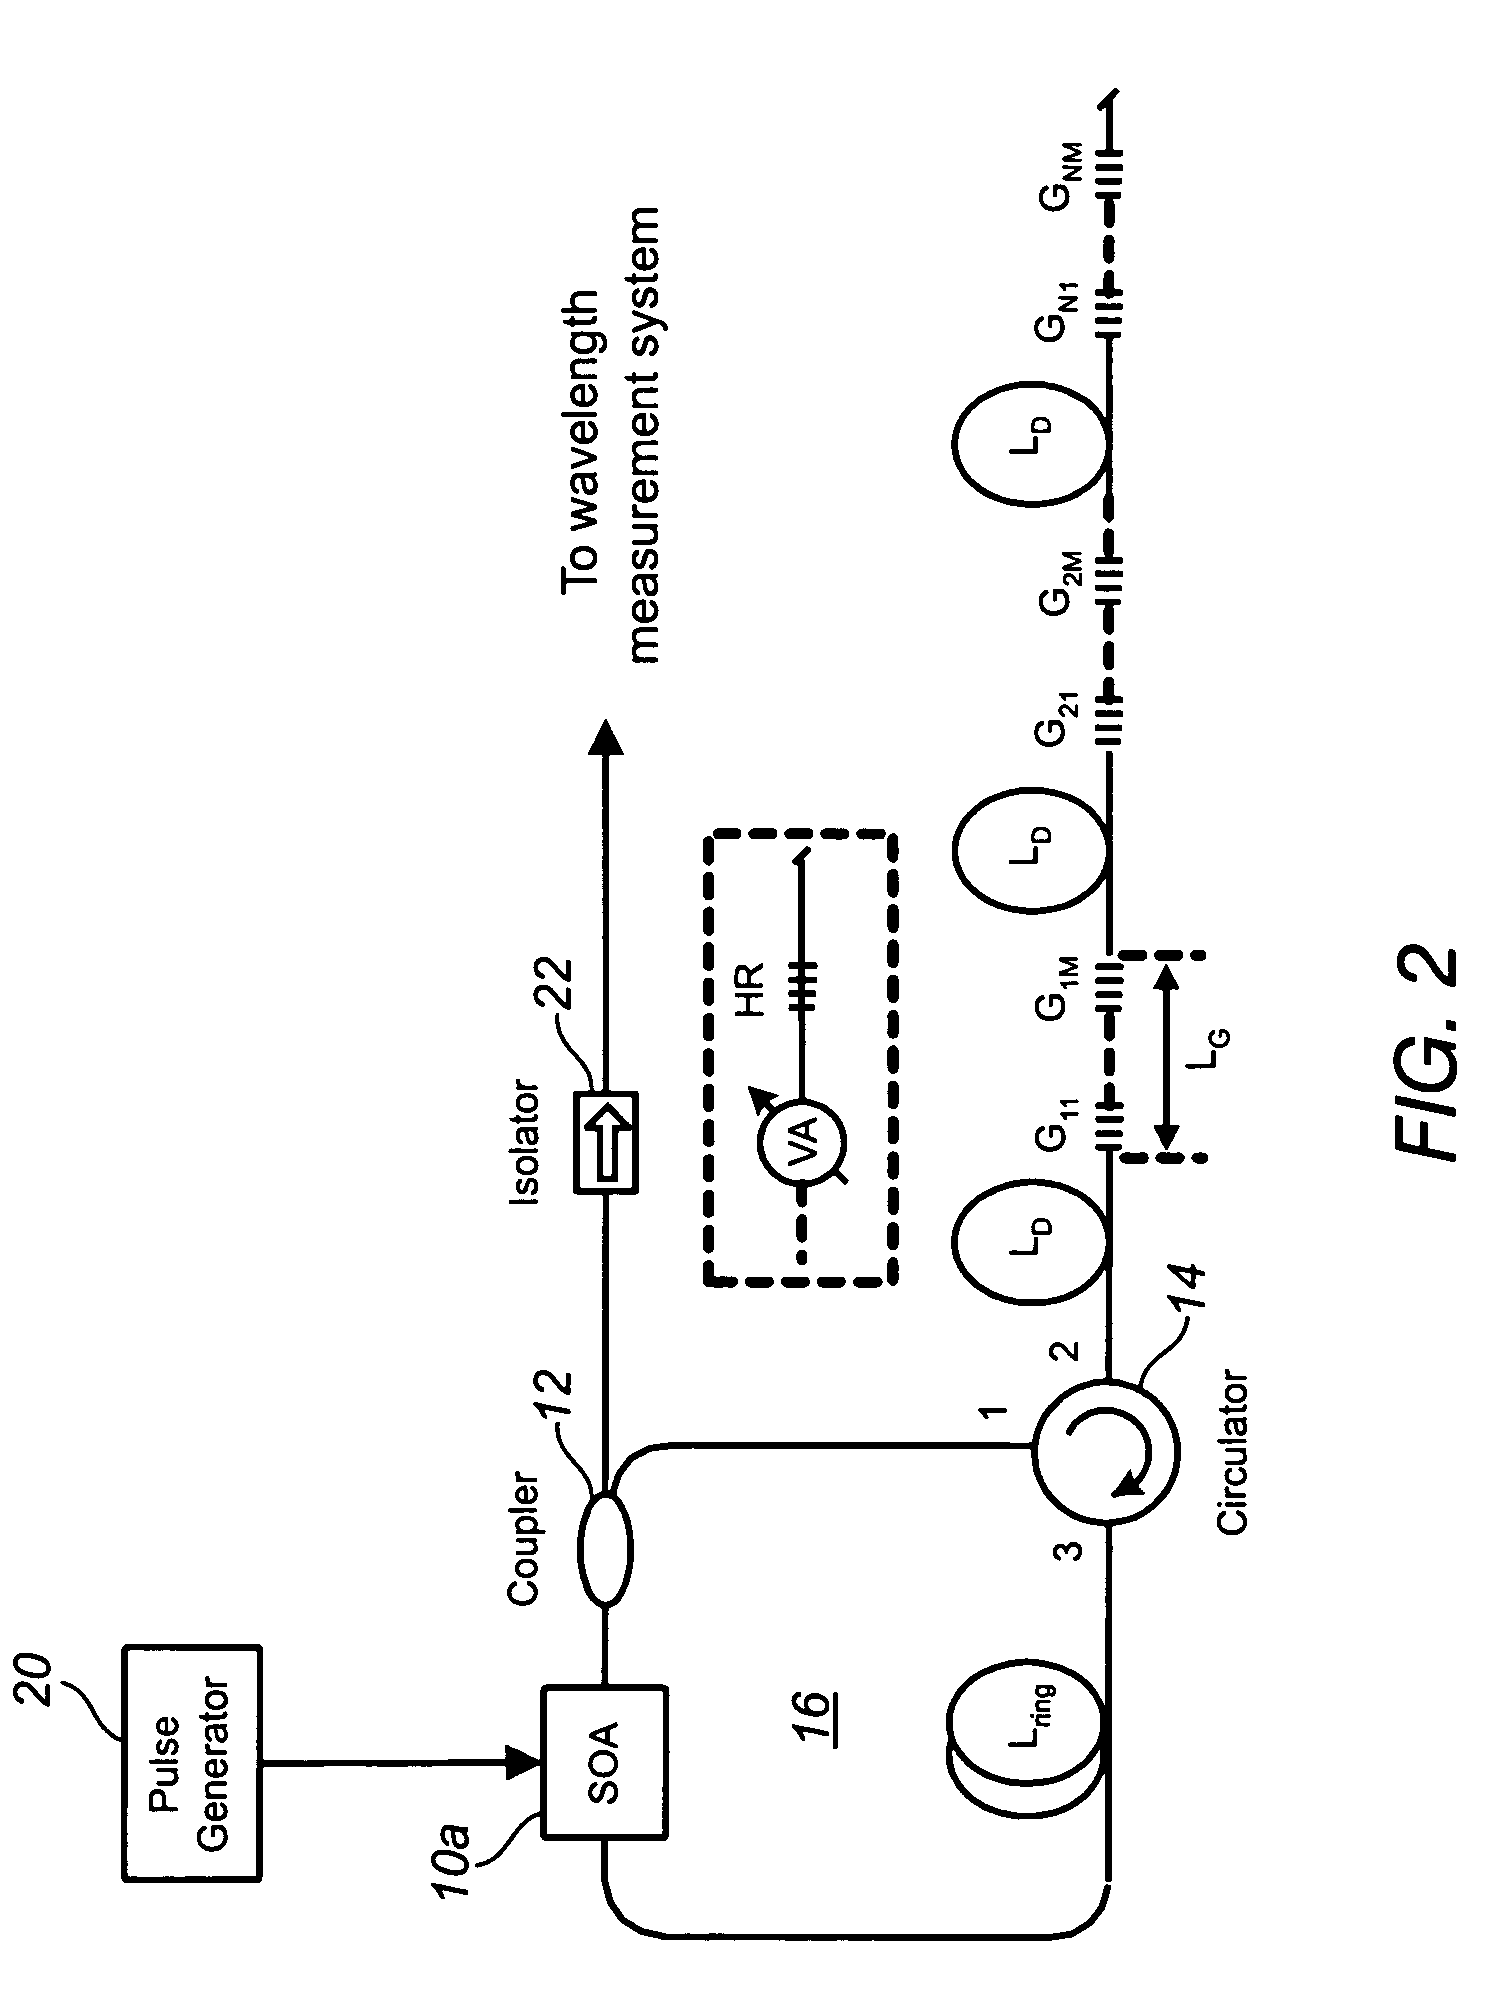 FBG sensor interrogation method using semiconductor optical amplifier in ring cavity configuration